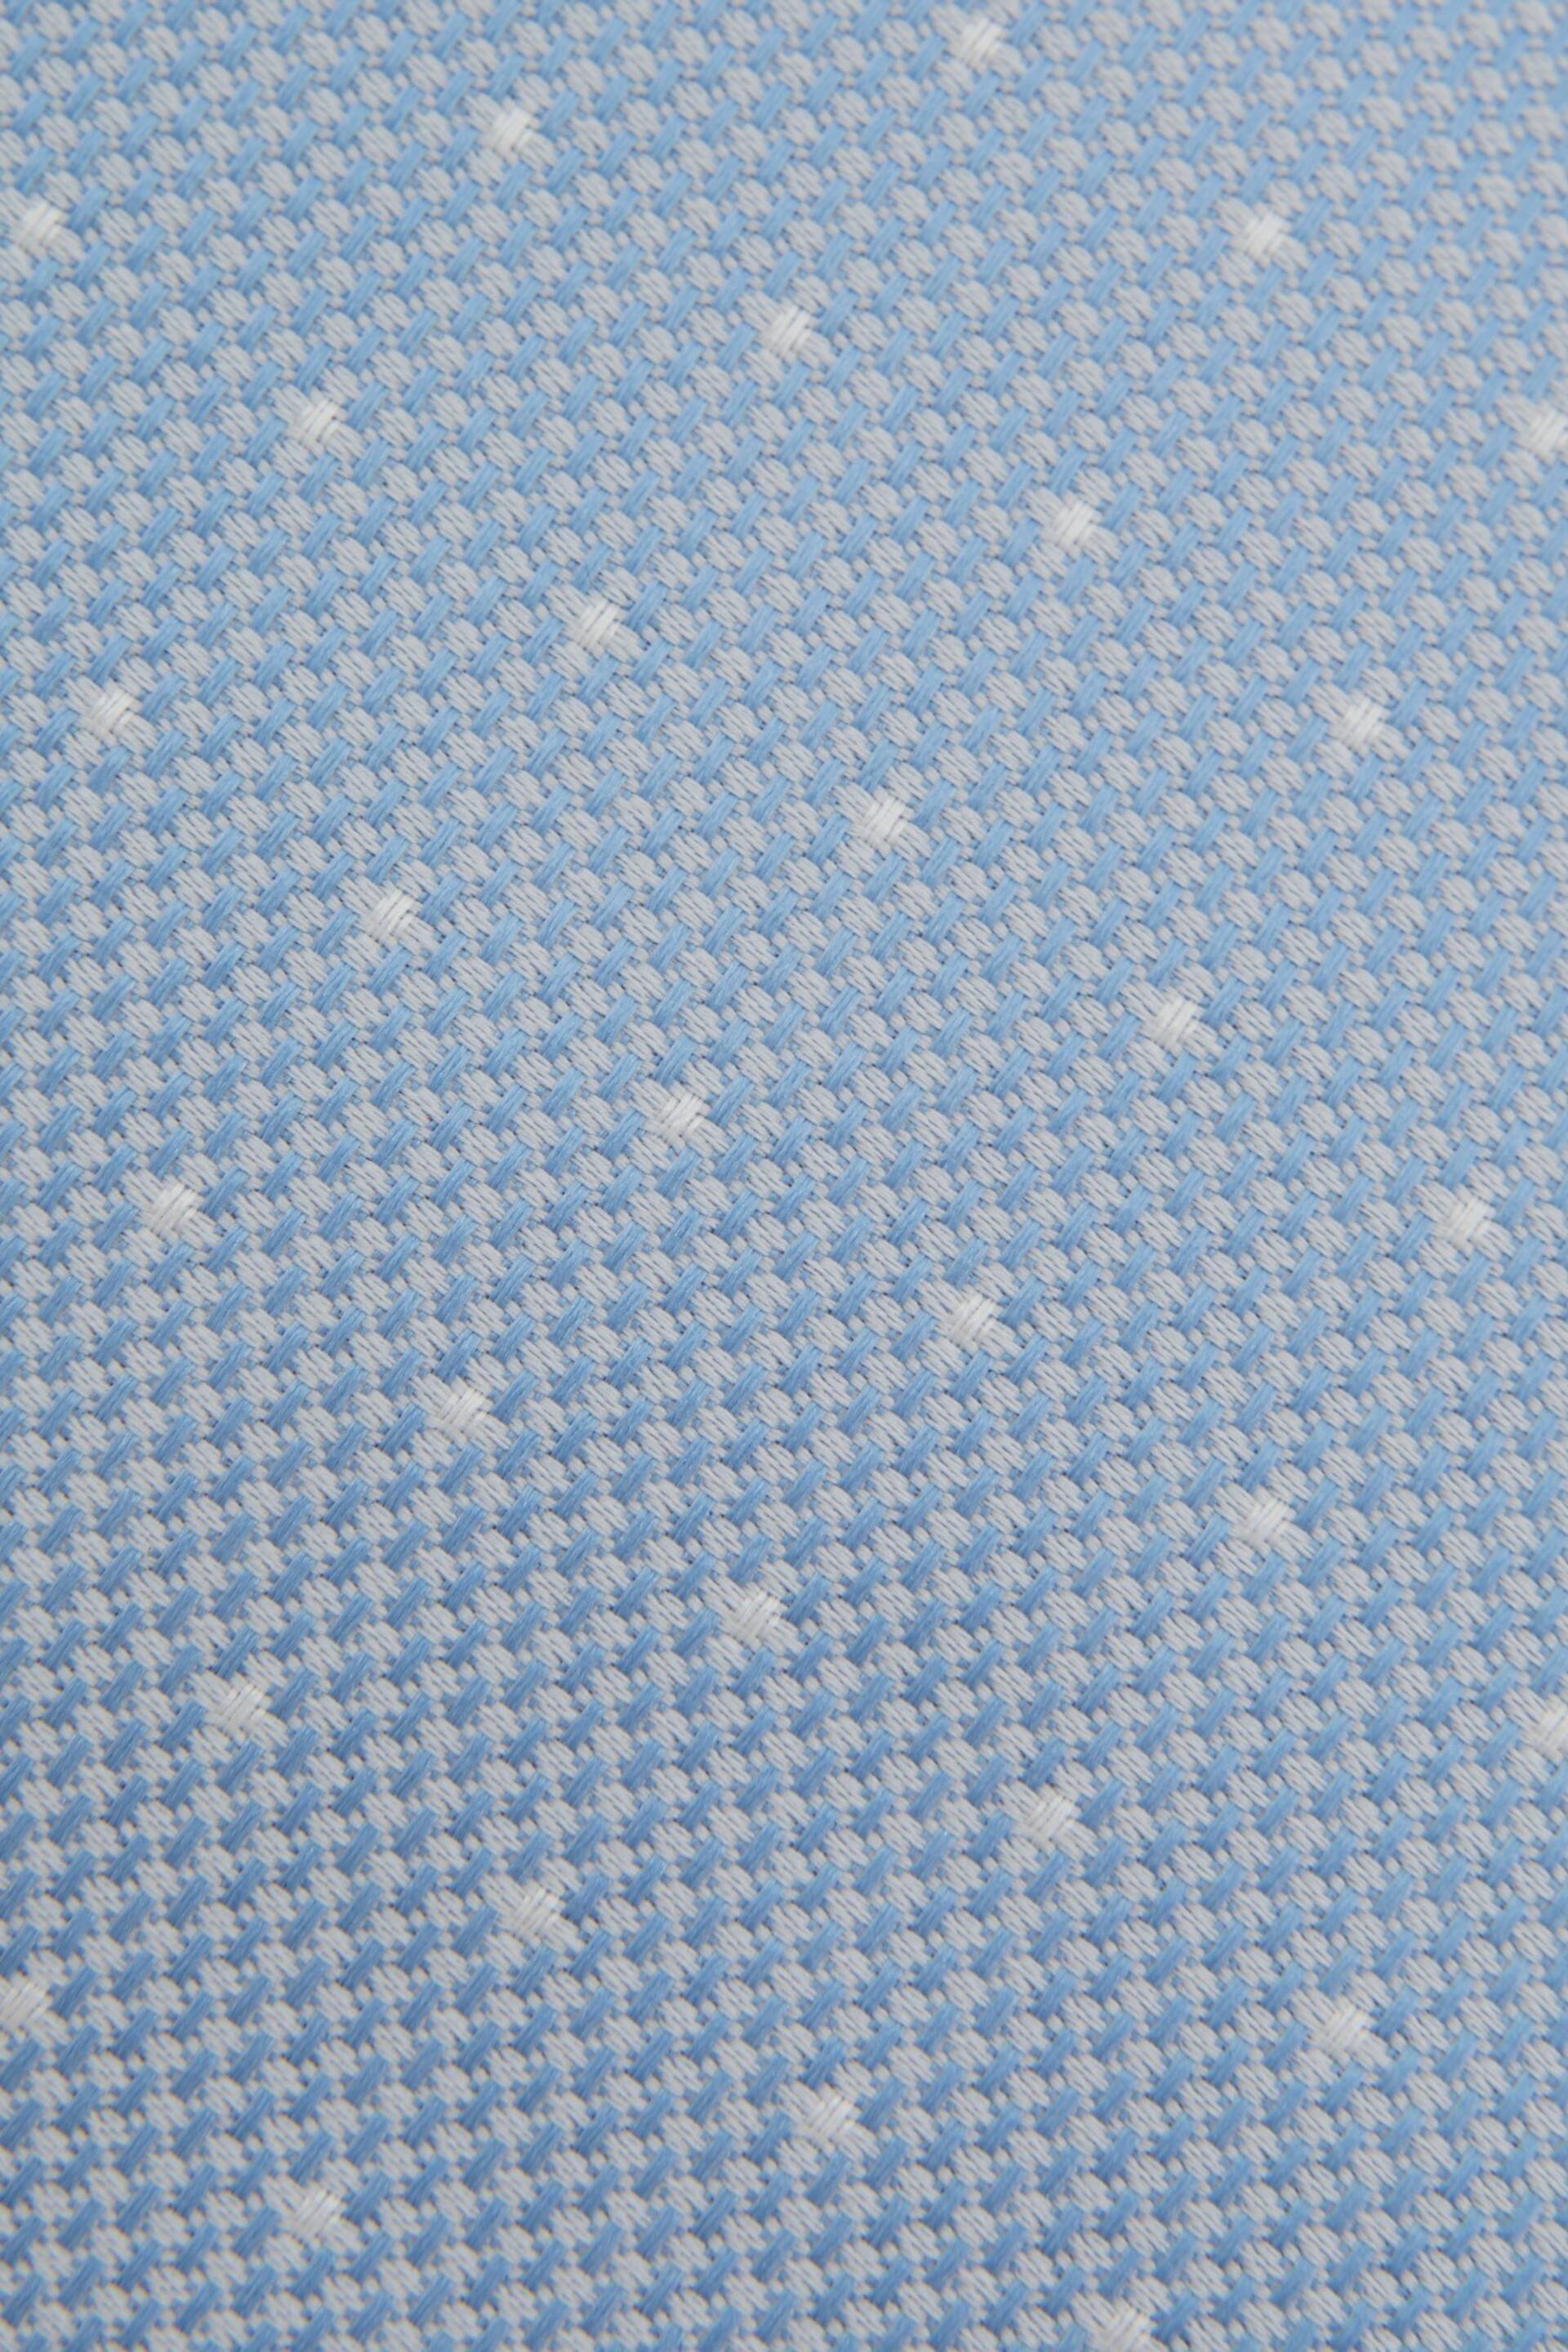 Reiss Soft Blue Liam Silk Polka Dot Tie - Image 5 of 5